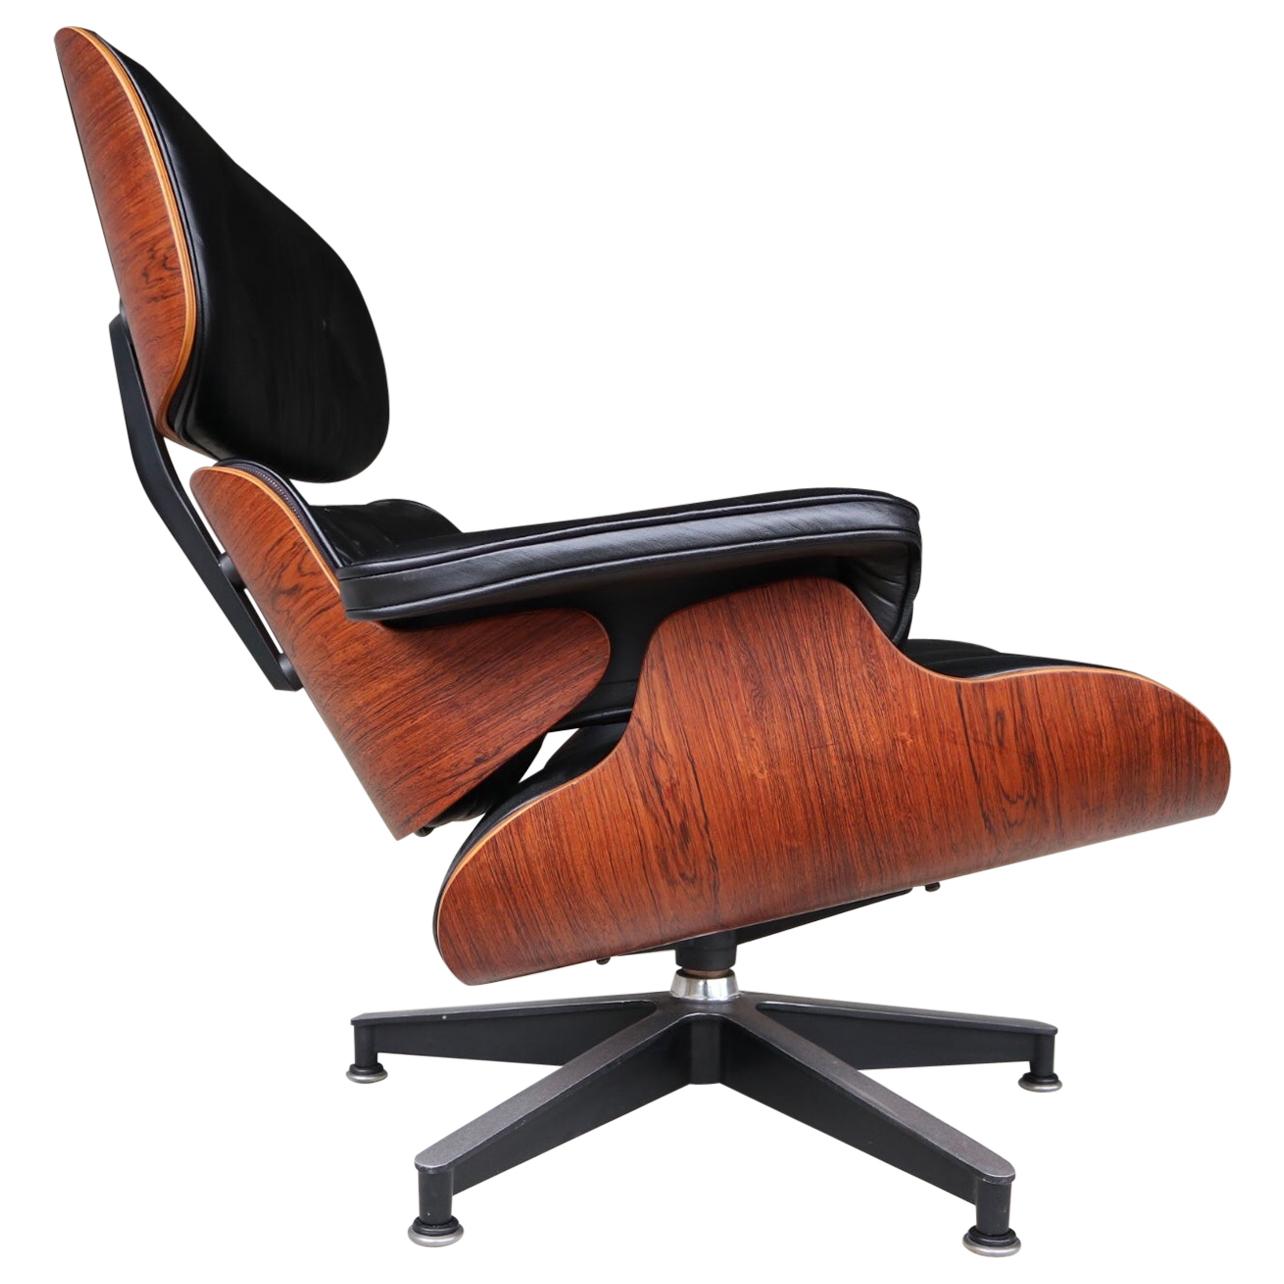 Herman Miller Eames Lounge Chair in Rosewood